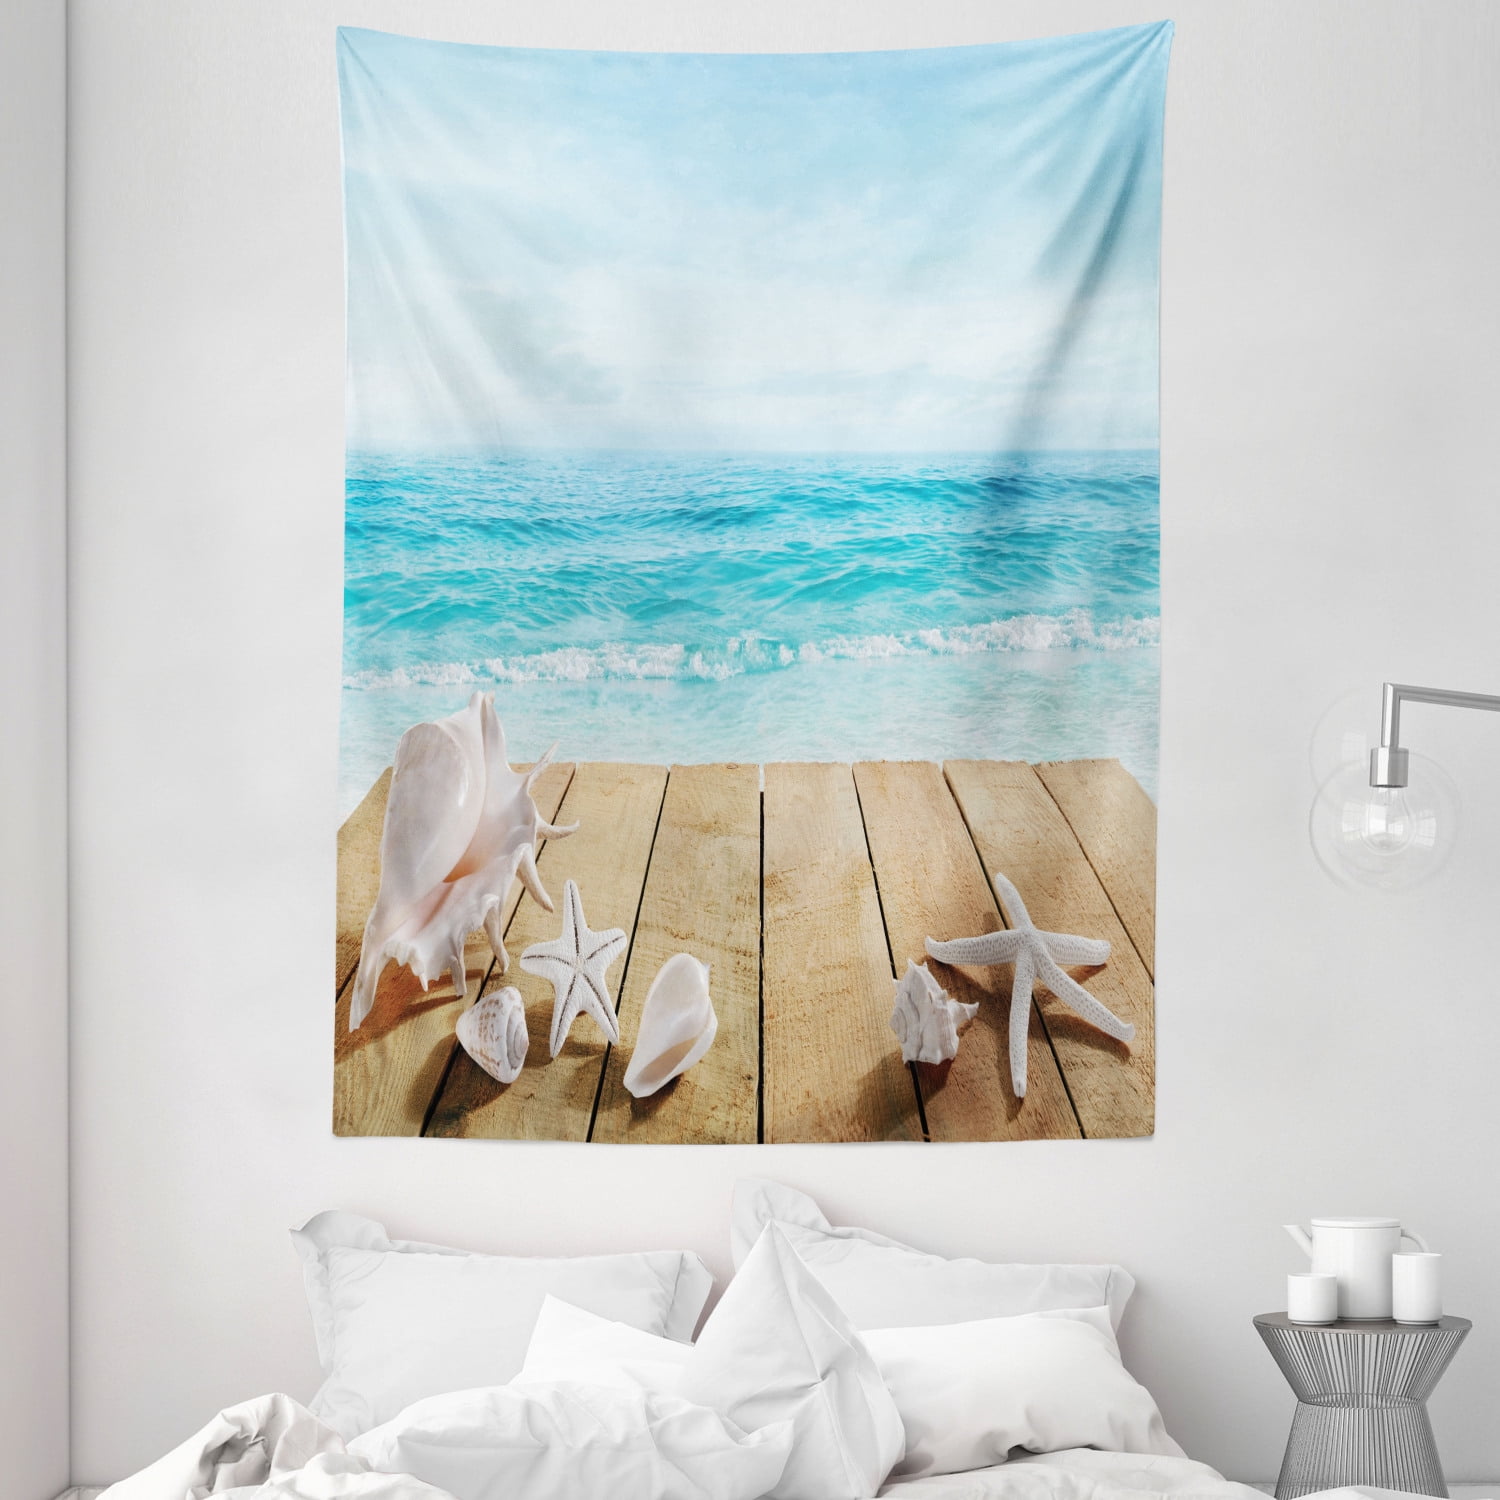 Blue Ocean Sand Beach Scenery Tapestry Wall Hanging Living Room Bedroom Decor 